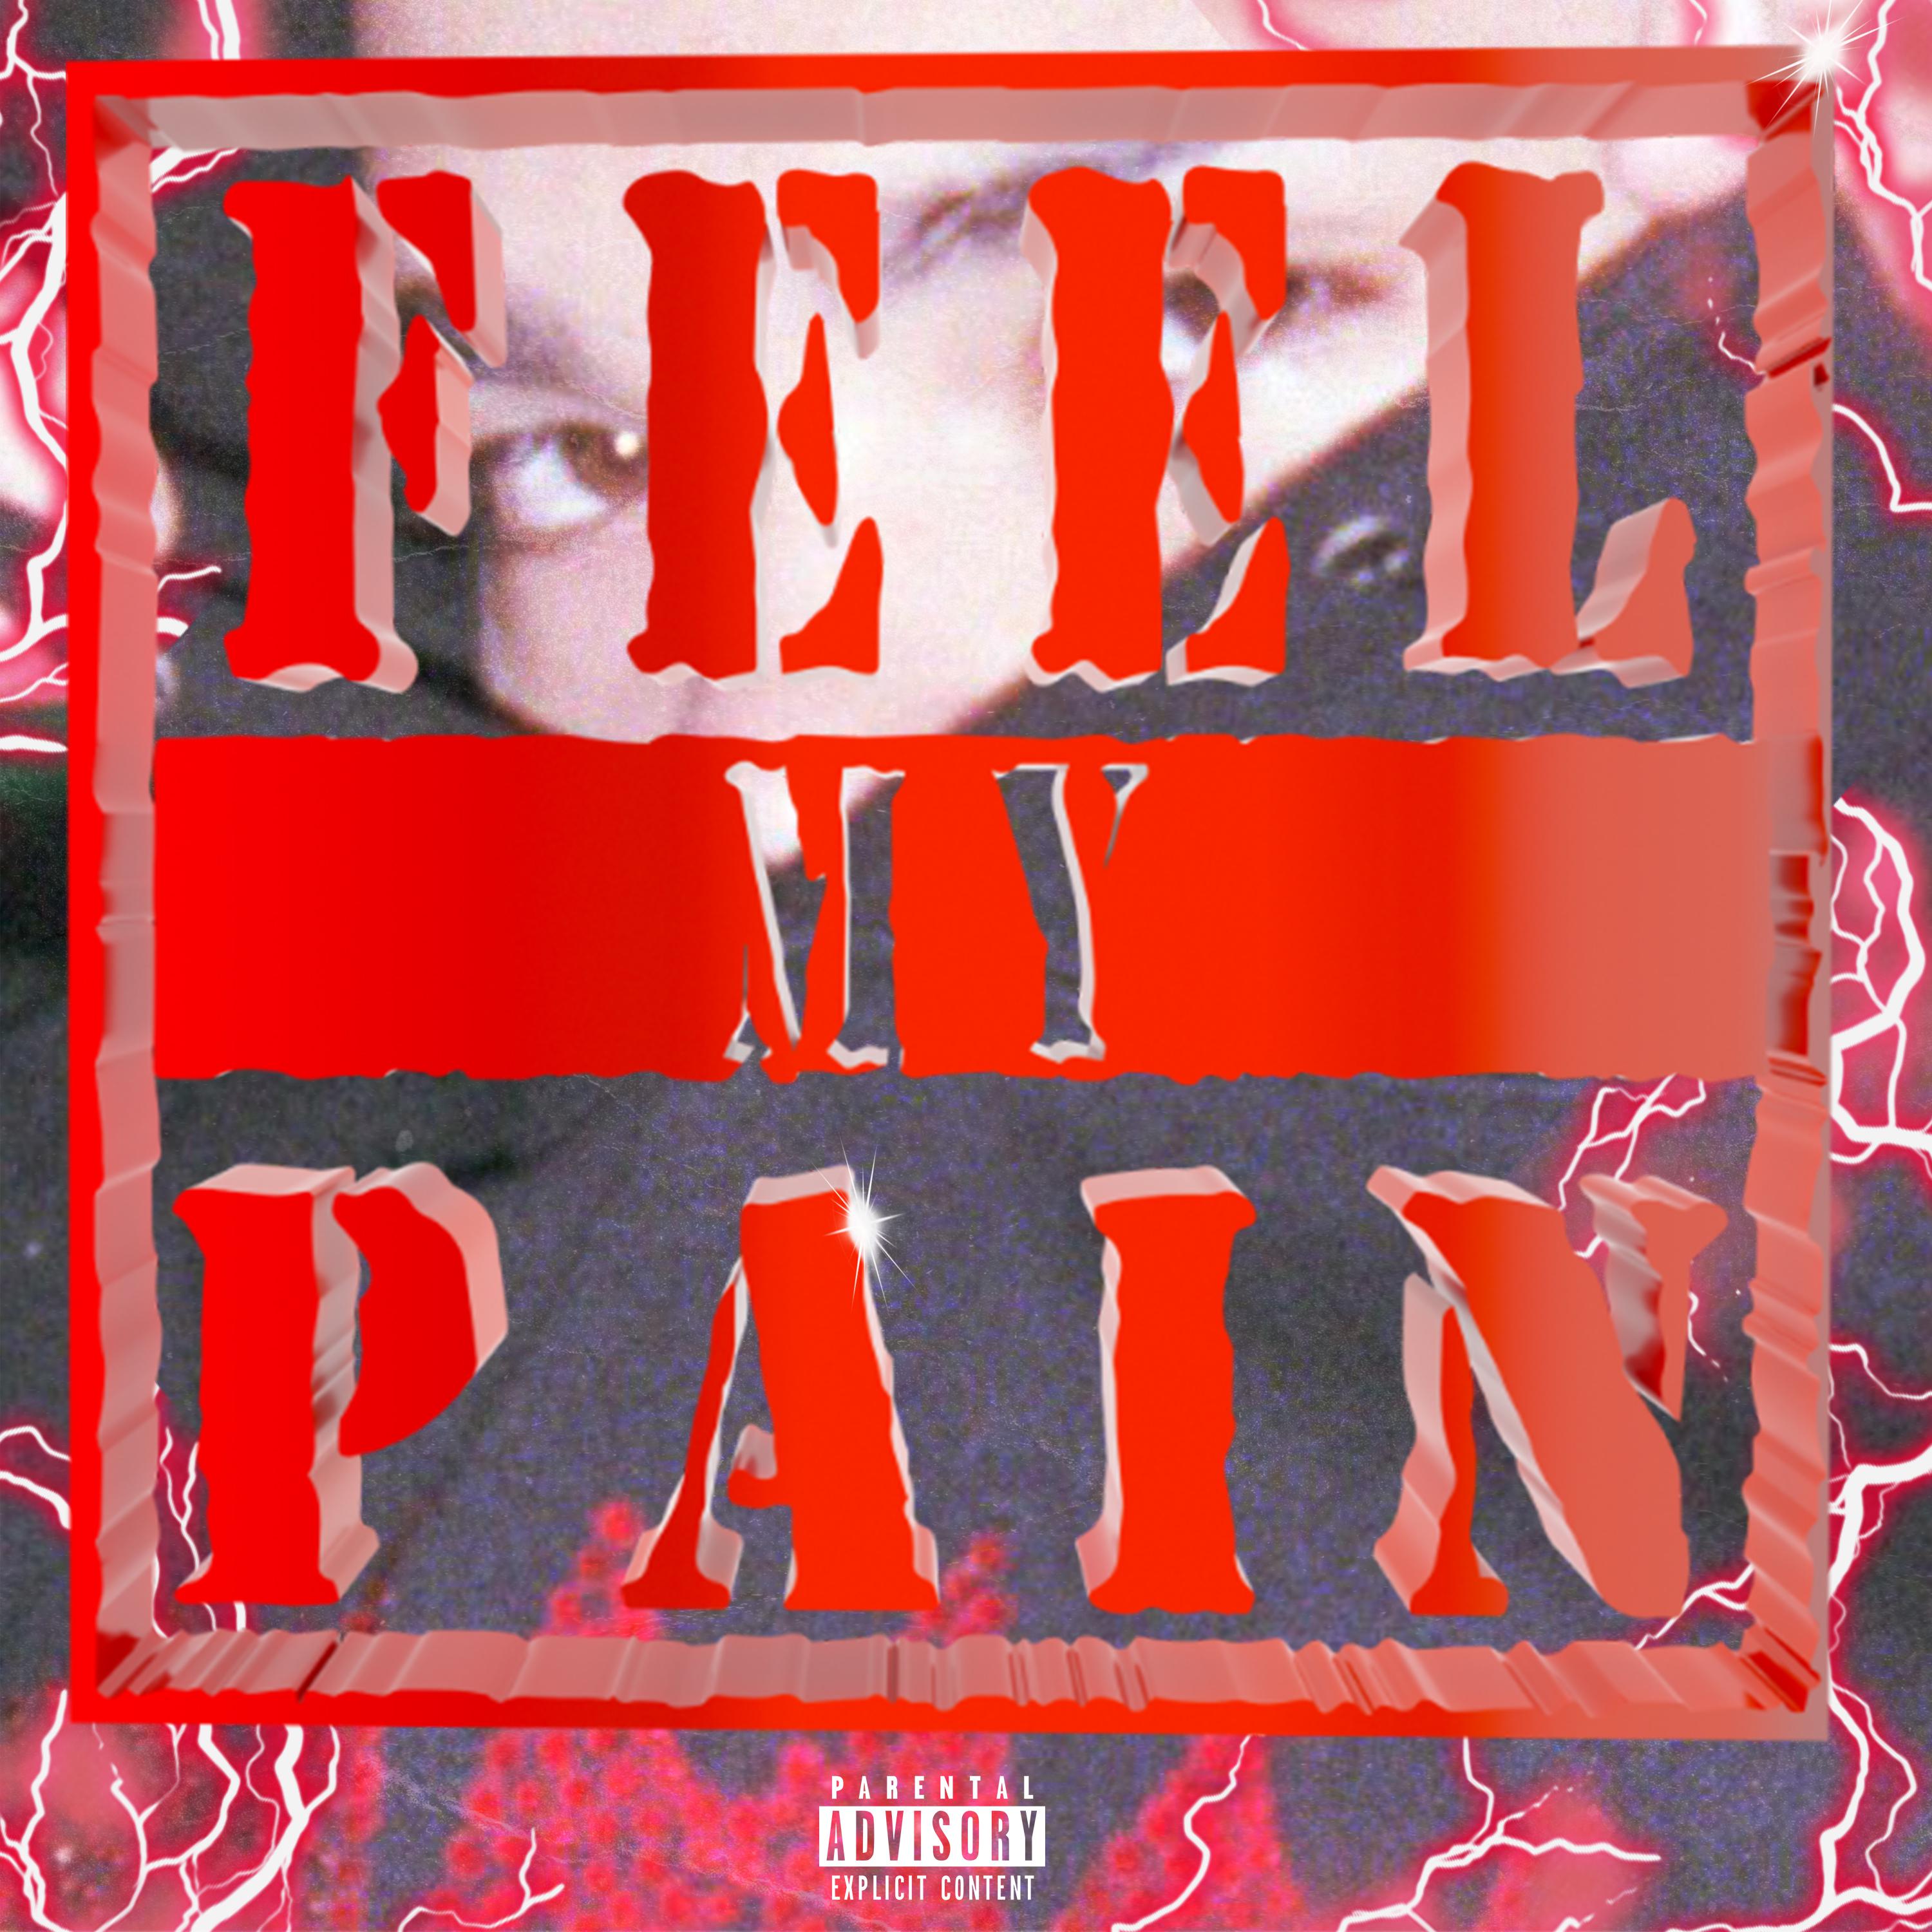 FEEL MY PAIN